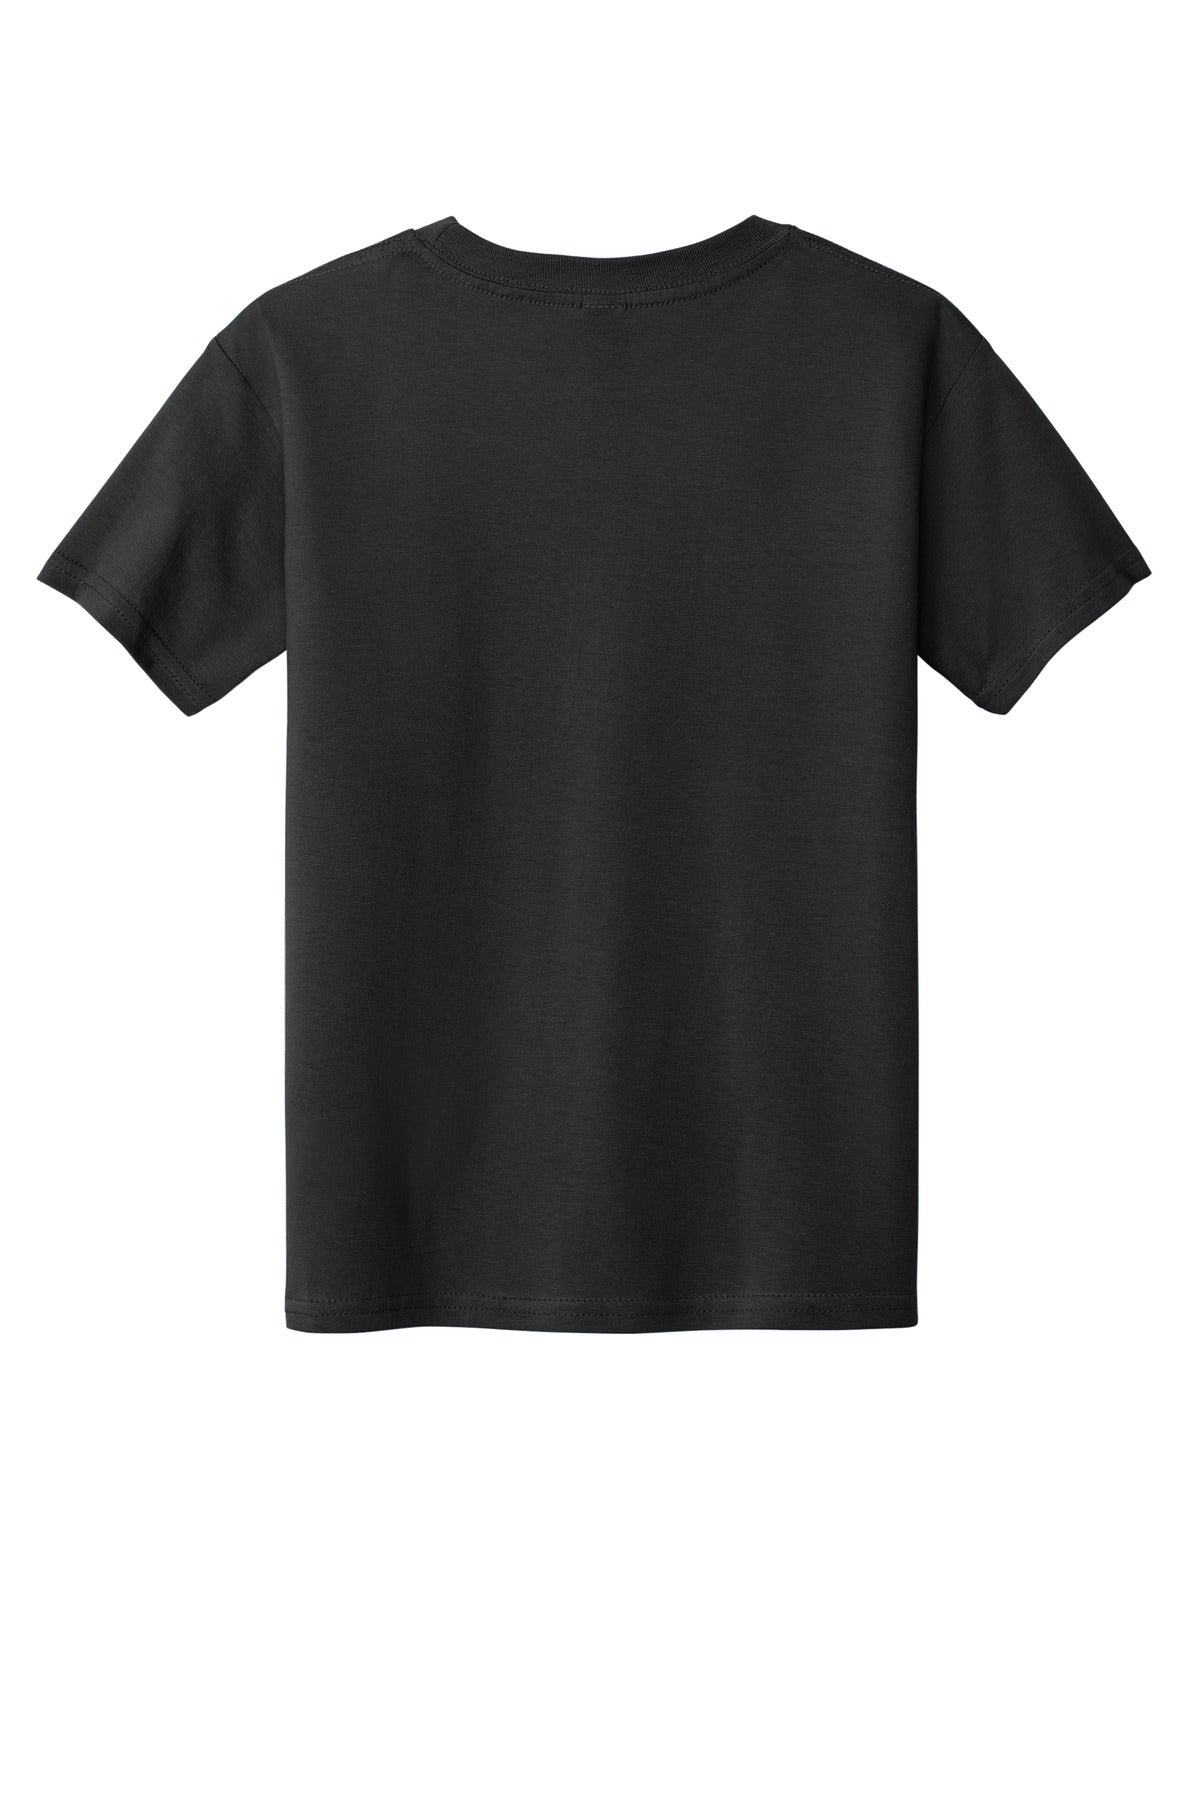 Gildan Youth Softstyle T-Shirt 64000B - BT Imprintables Shirts